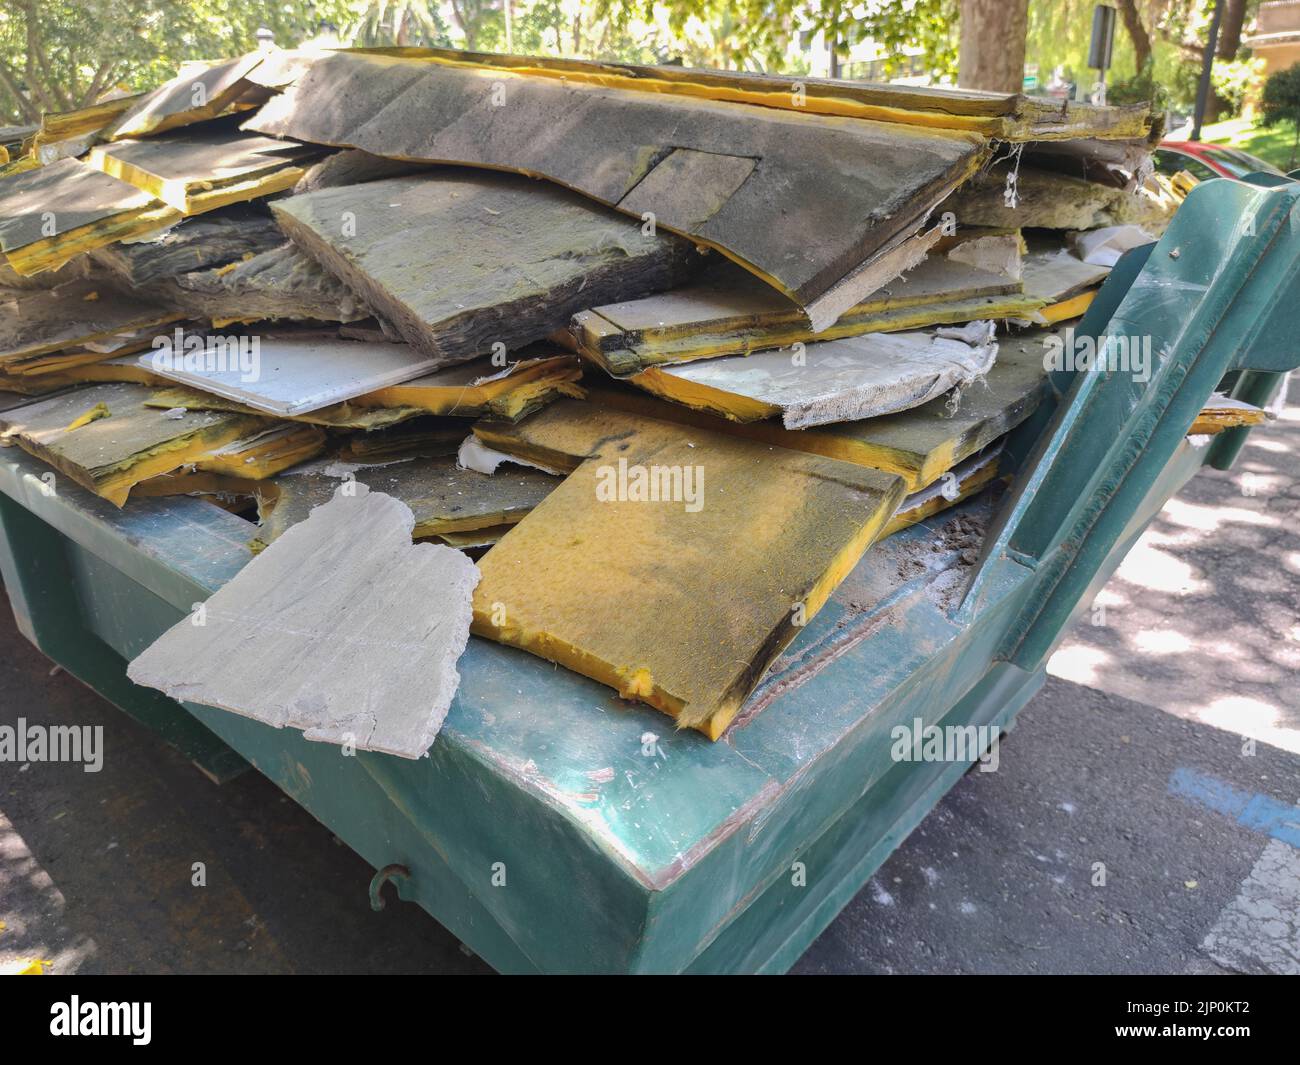 Container full of polyurethane sheets. Management of hazardous waste Stock Photo